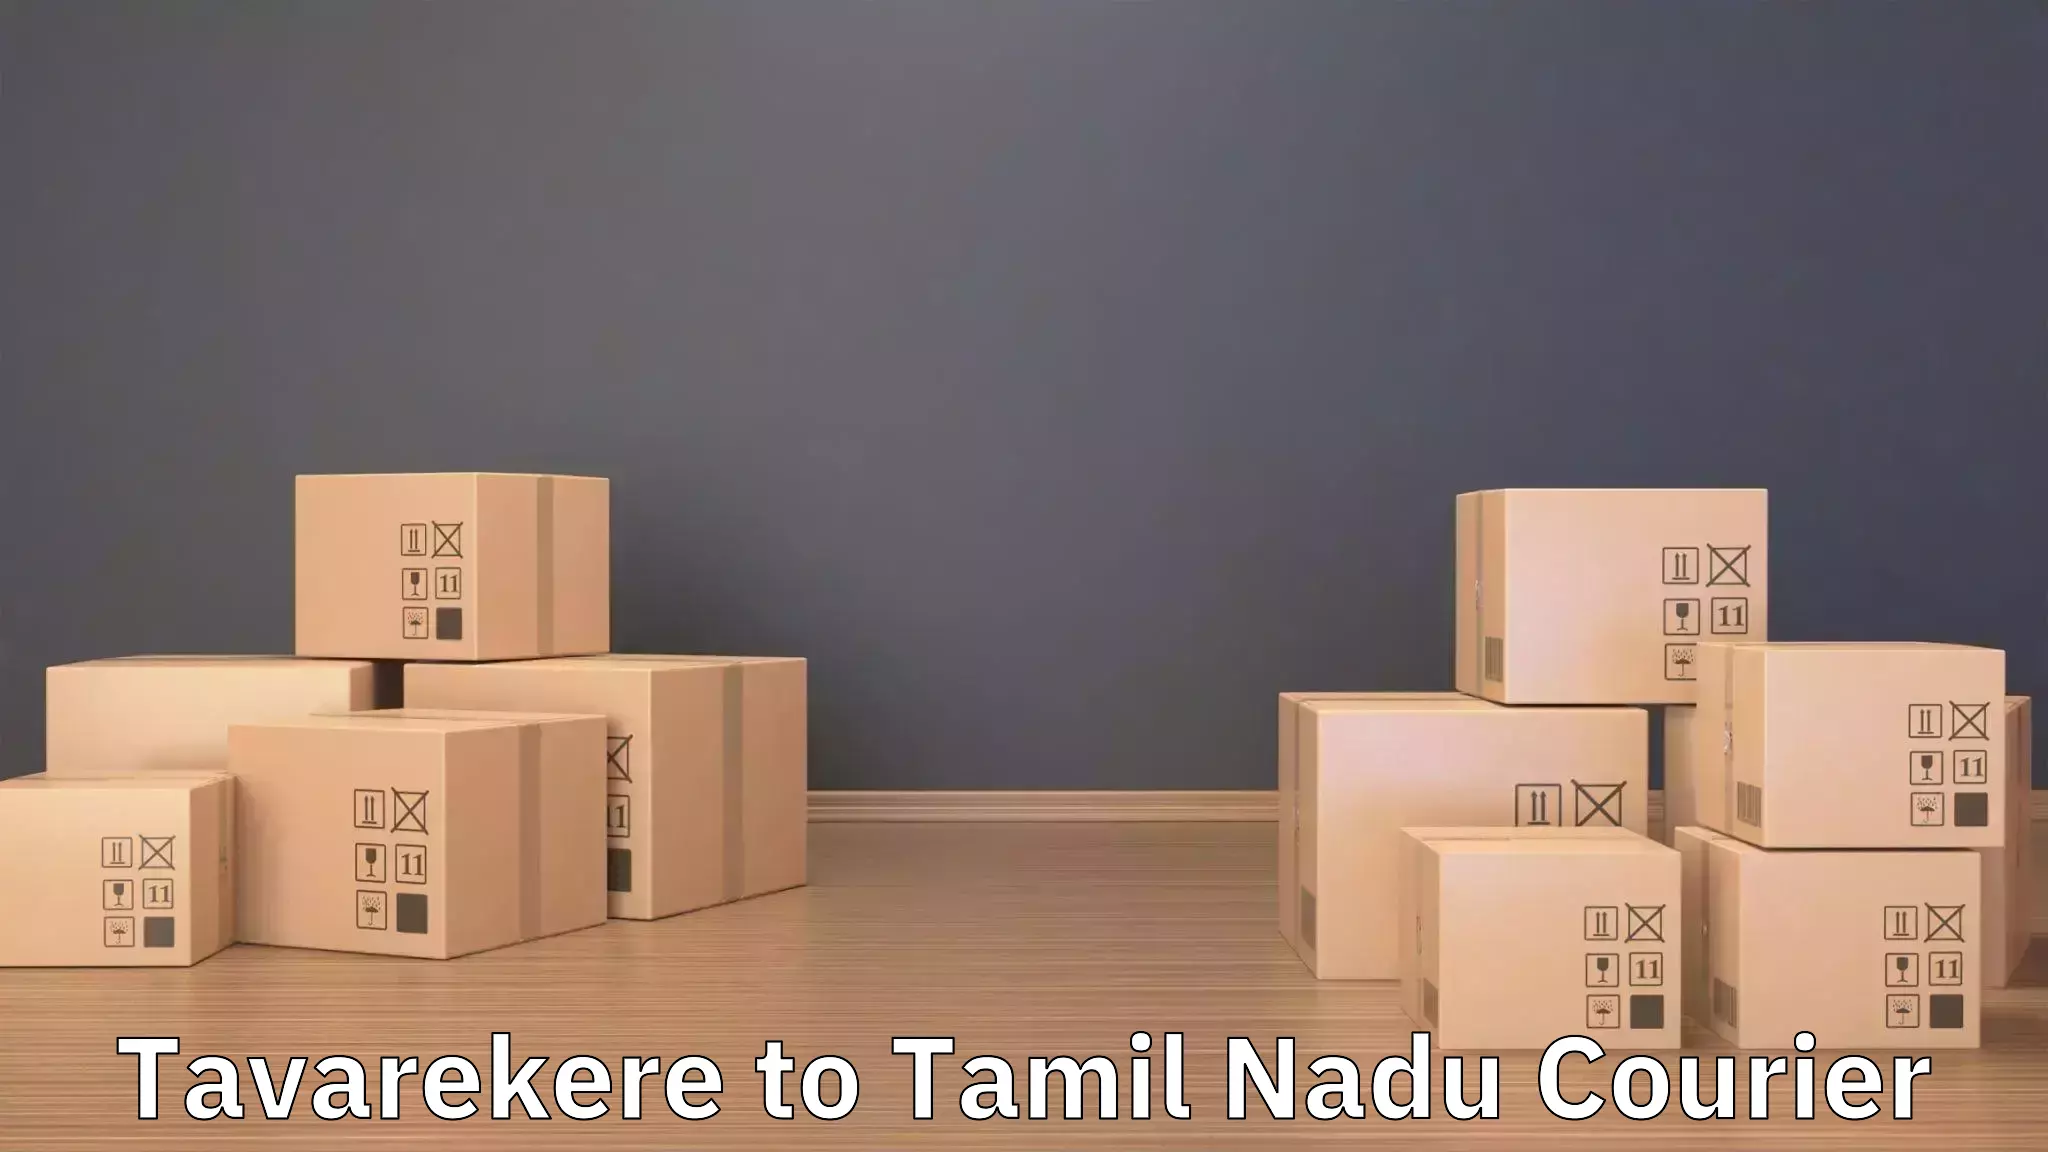 Trusted relocation experts Tavarekere to Tamil Nadu